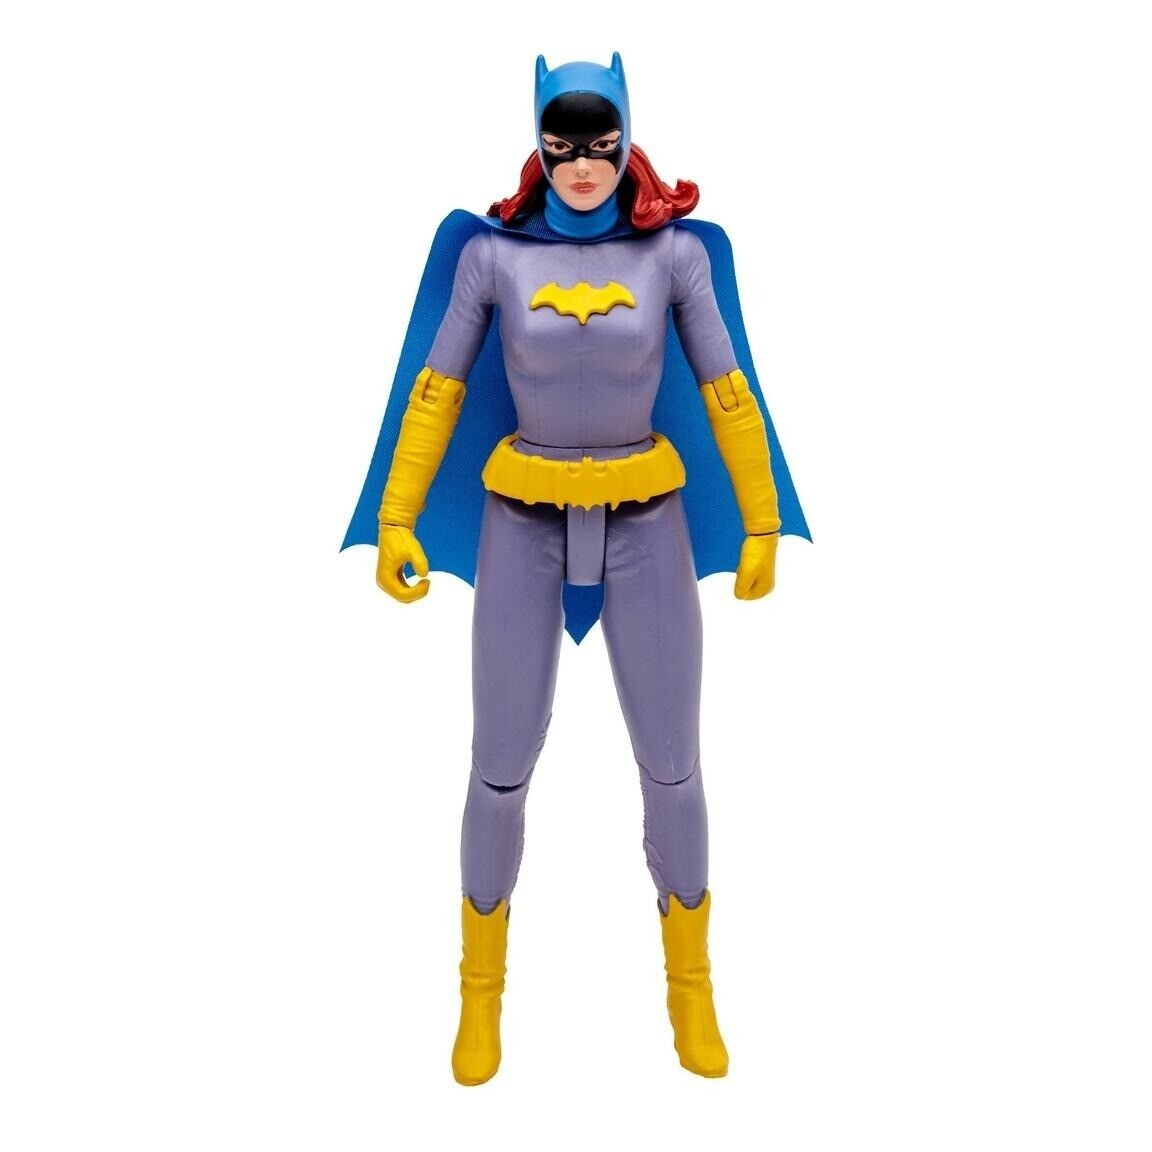 DC Retro 66: The New Adventures of Batman - Batgirl 6" Action Figure